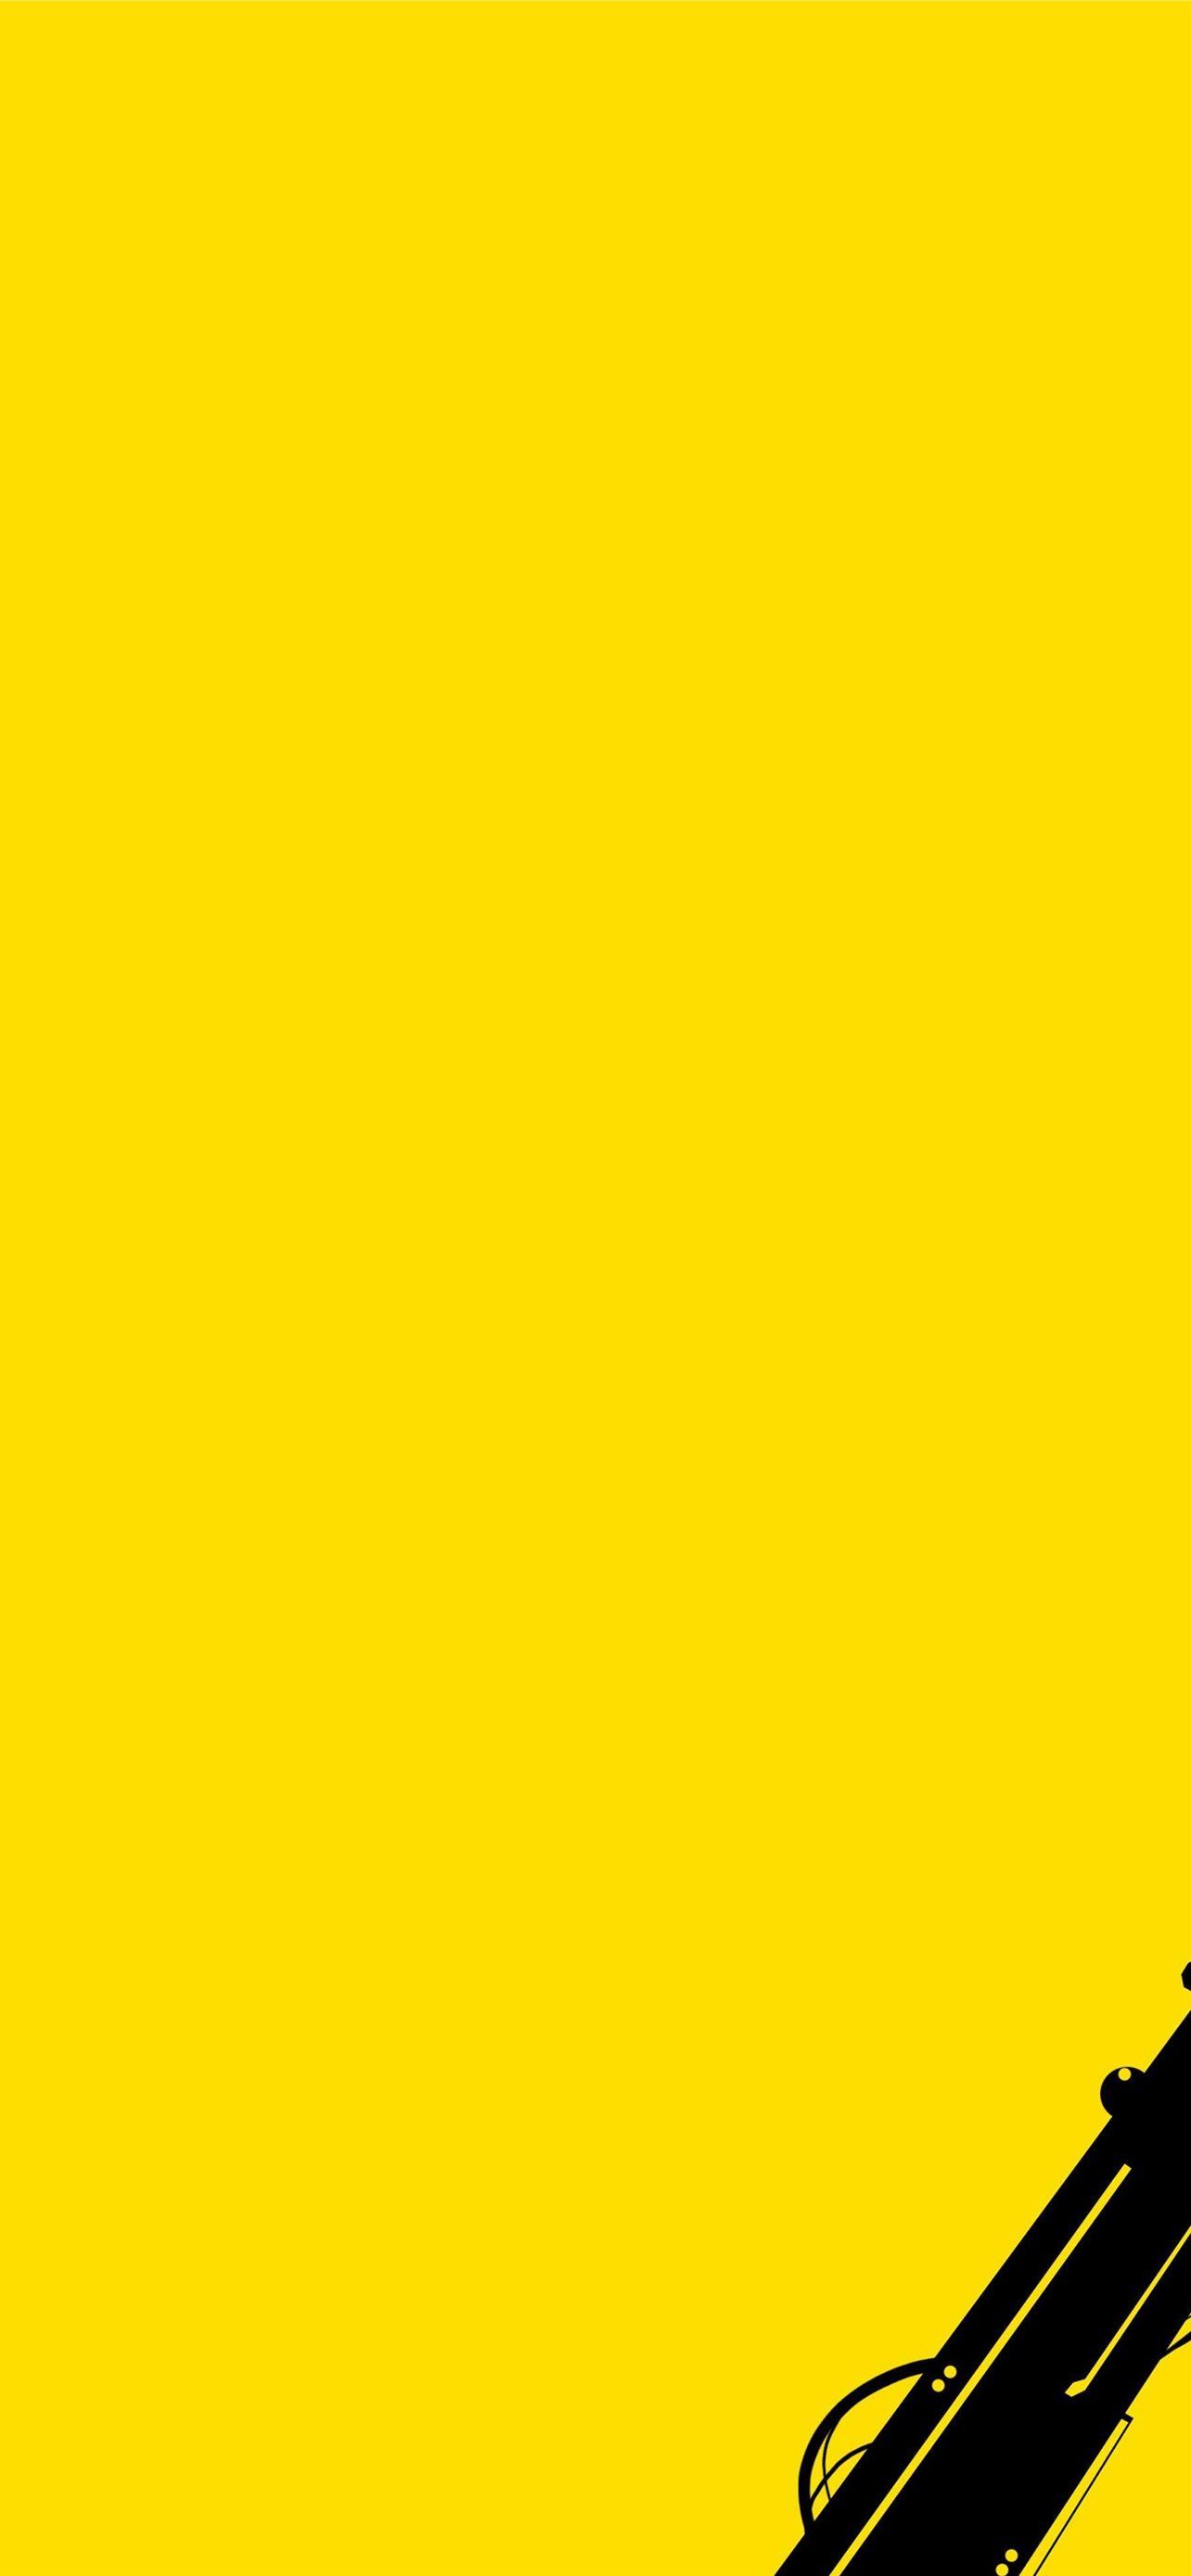 pokemon yellow iPhone Wallpaper Free Download